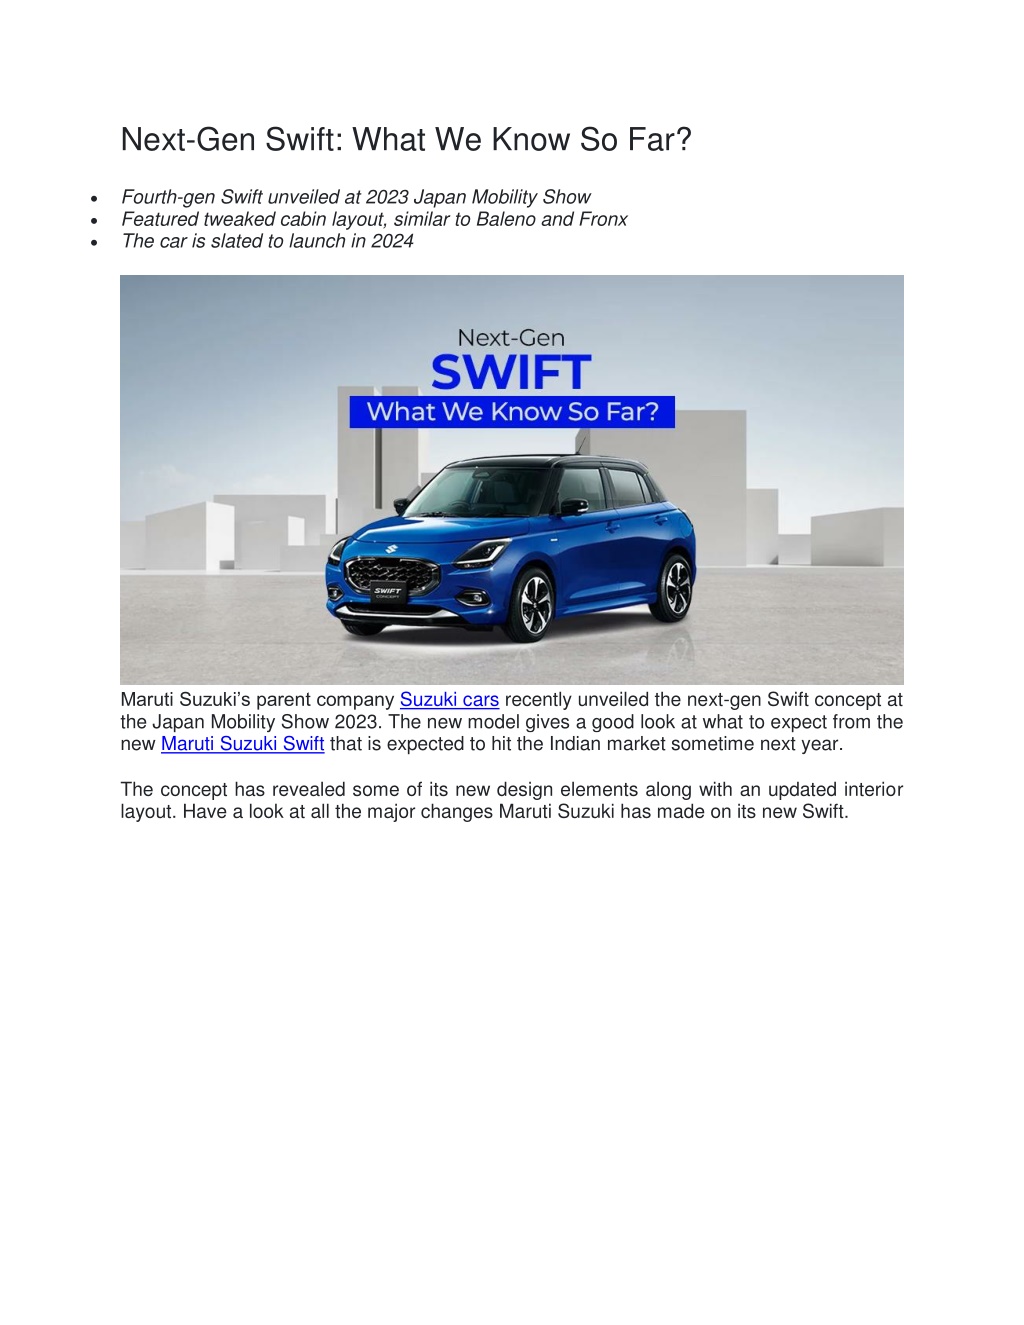 All-New Suzuki Swift: What to expect